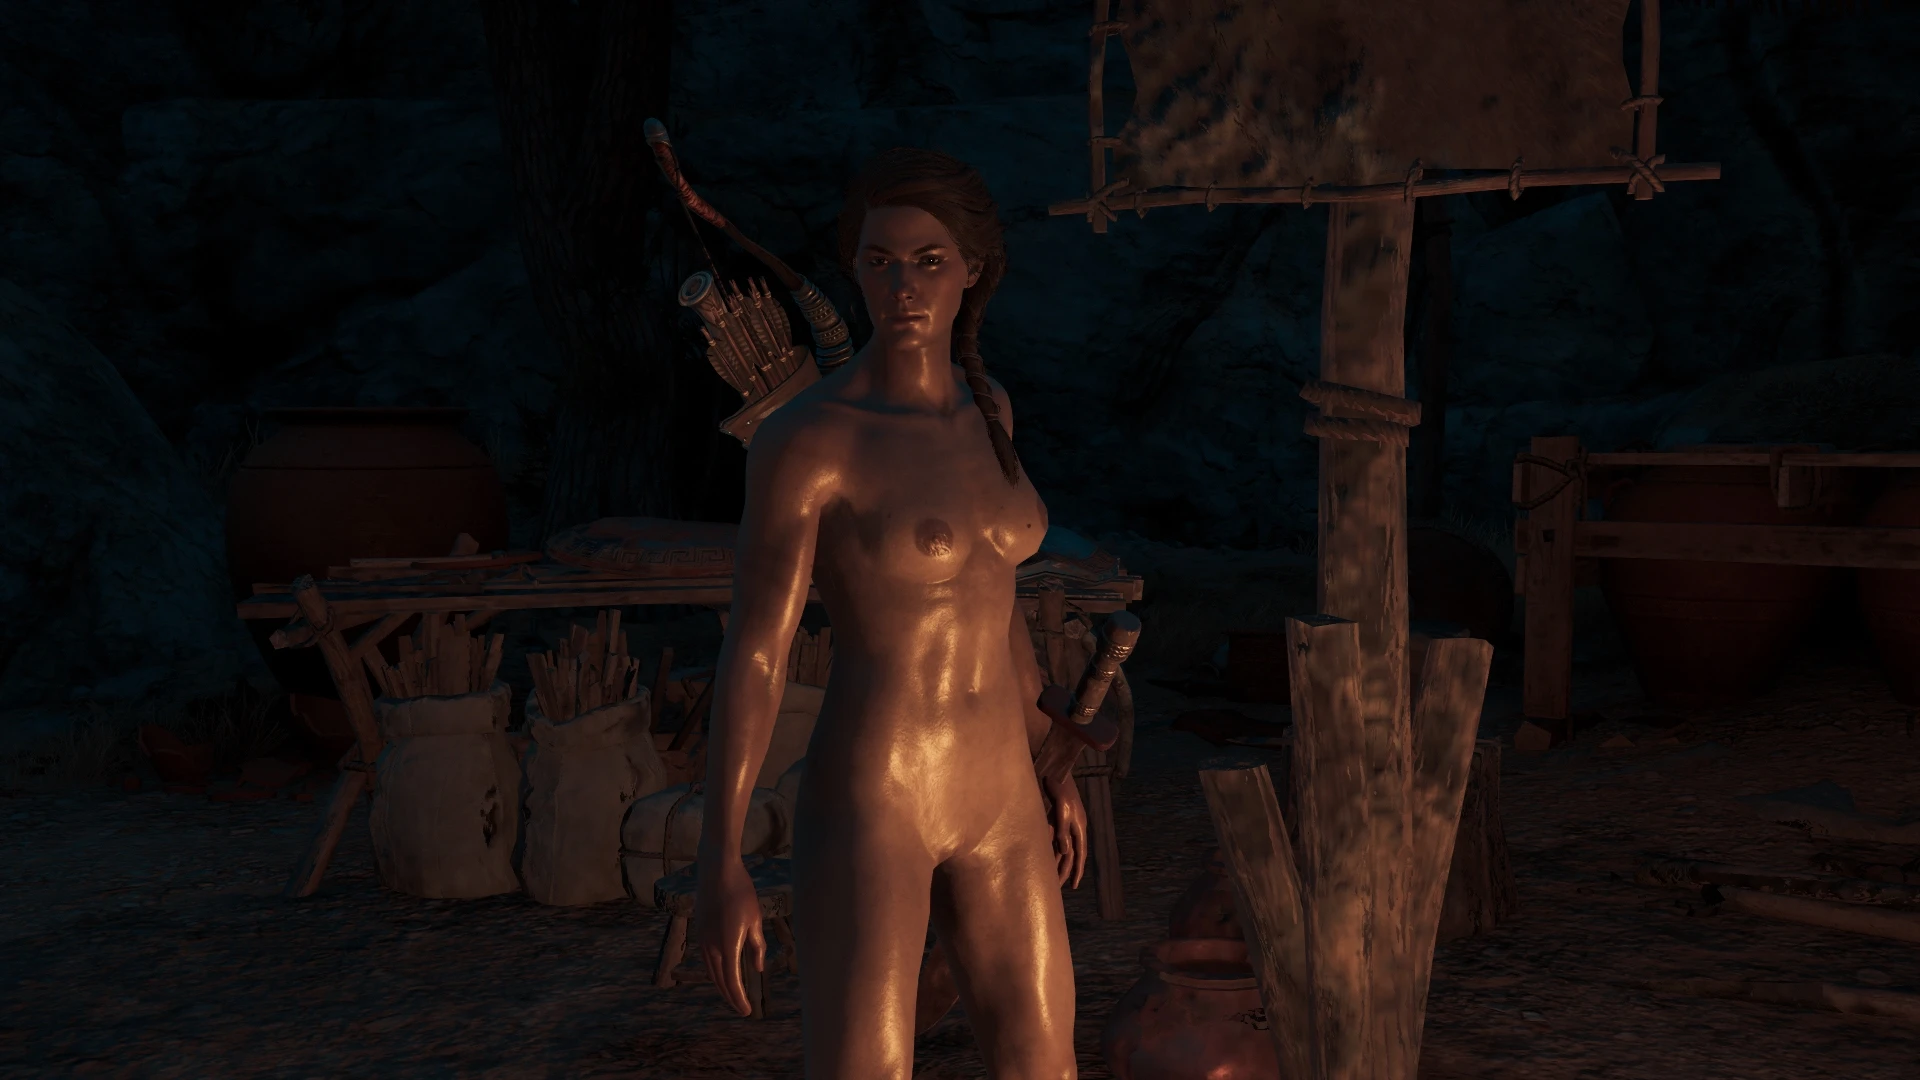 Futanari Transgender Shemale Mod For Assassin S Creed Odyssey